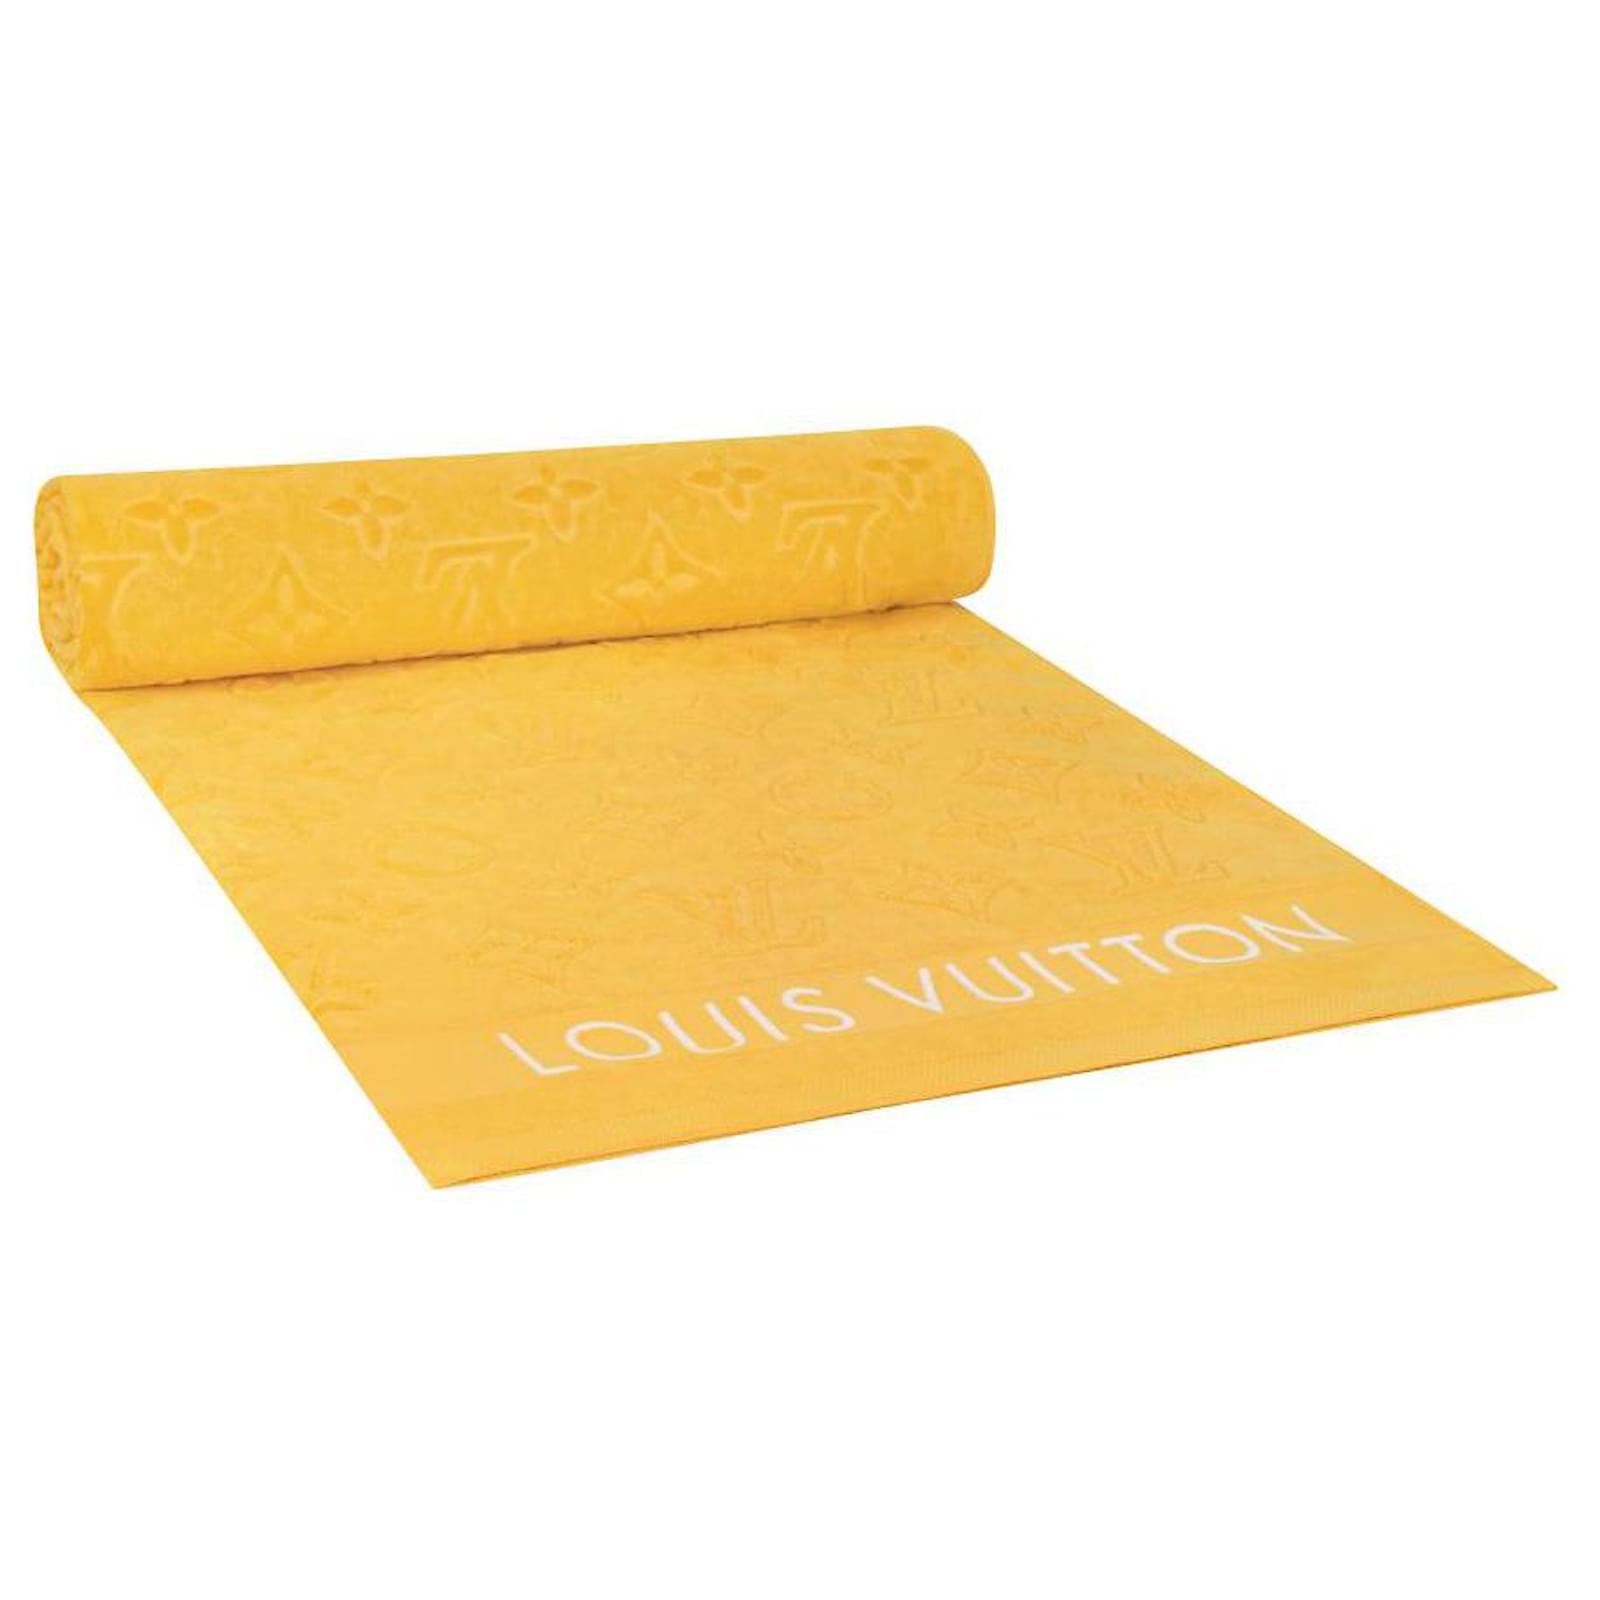 Authentic Louis Vuitton Beach Towel Logo Beach Towel -  Ireland